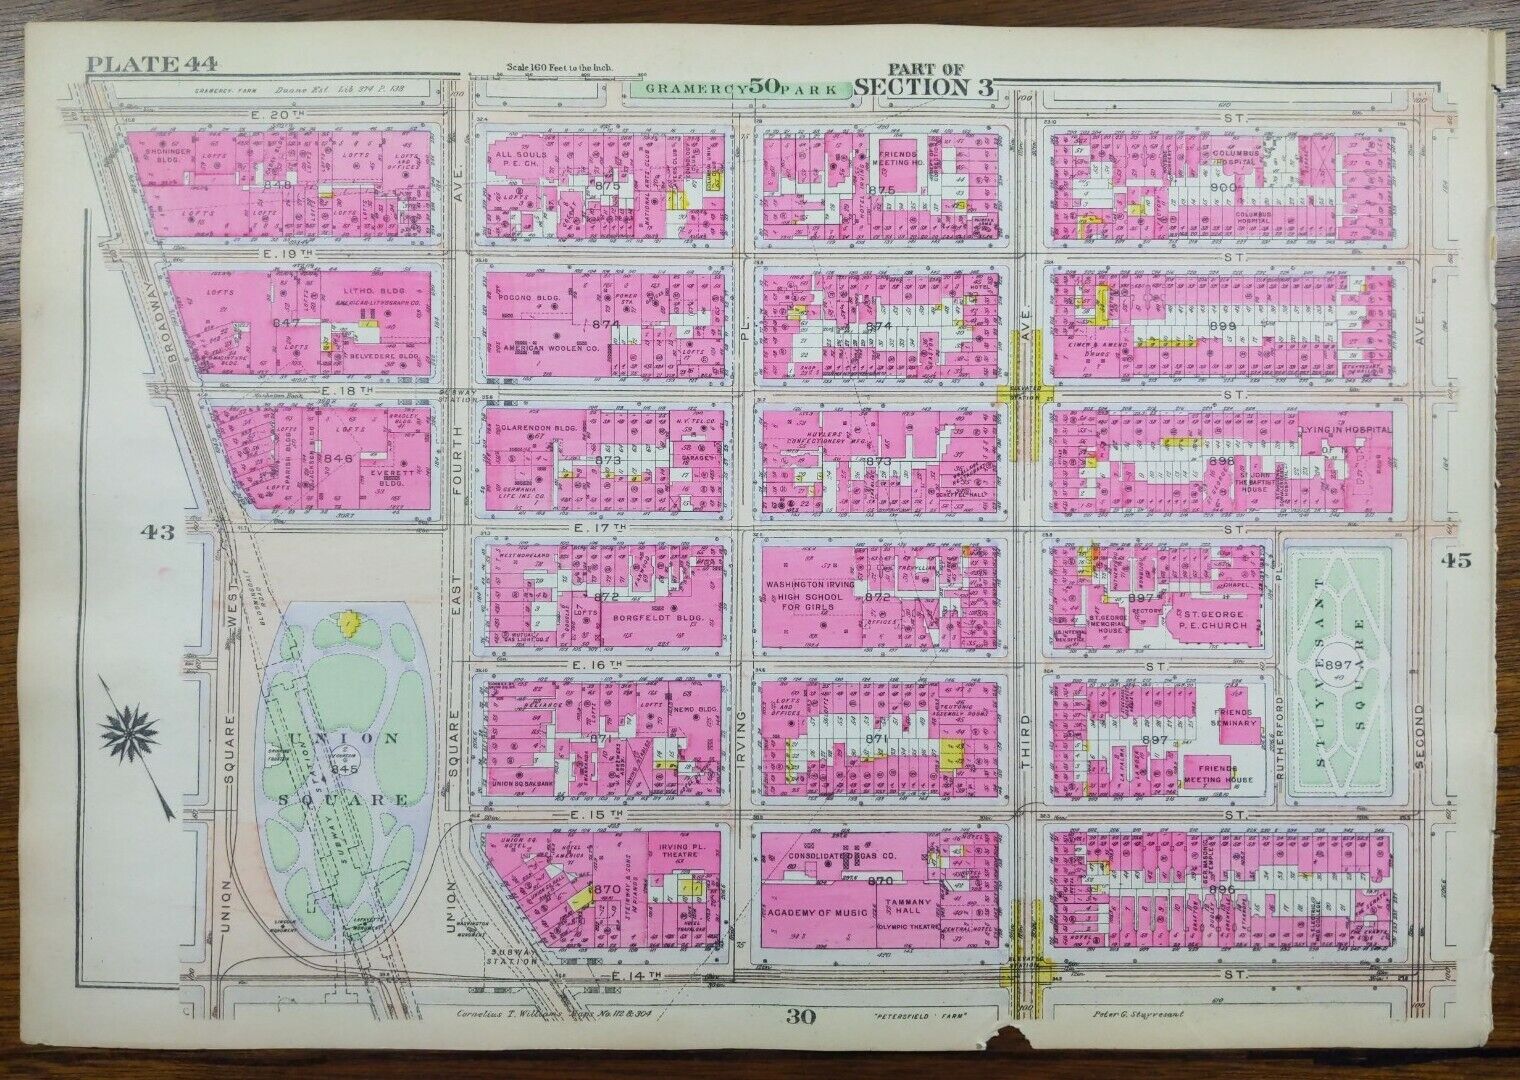 1916 UNION SQUARE STUYVESANT PARK MANHATTAN NEW YORK CITY Land & Street Map